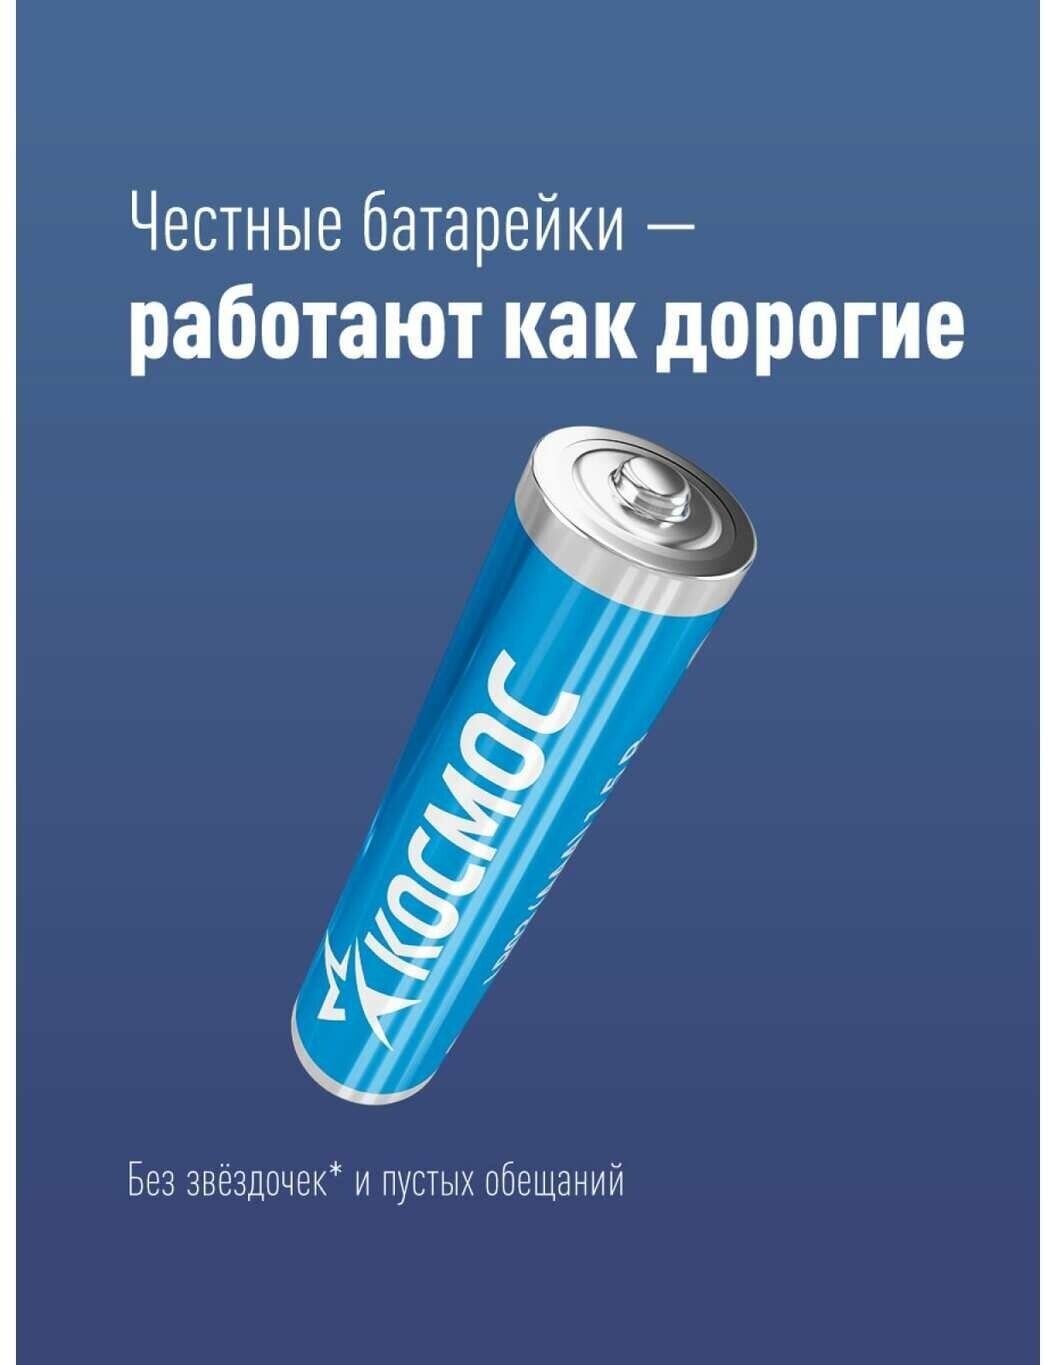 Батарейка КОСМОС LR03 Basic